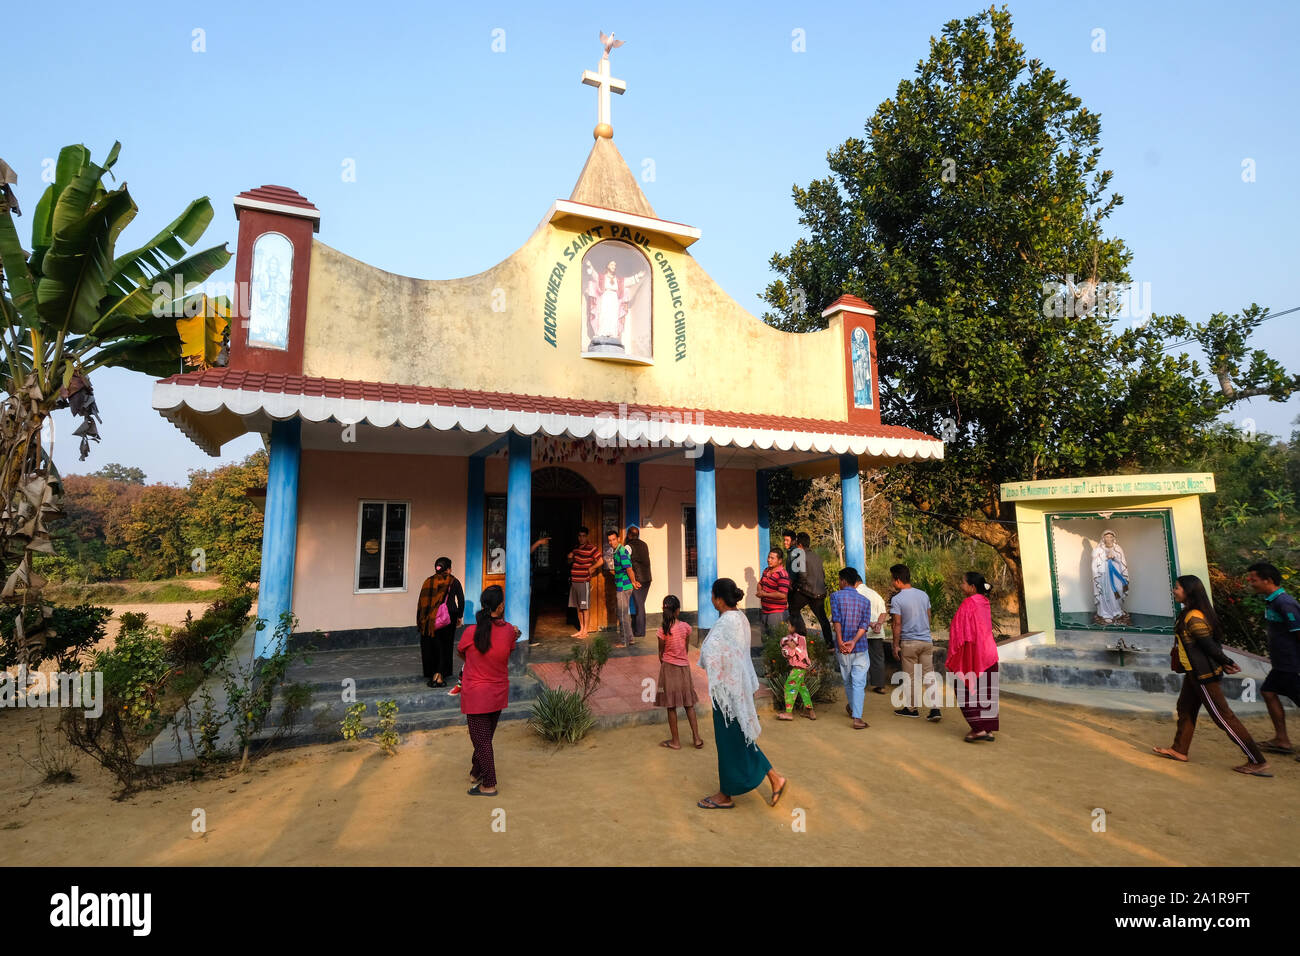 Faithful Christians at the Catholic St. Paul's Church in the village of Kachuchera, state of Tripura, northeastern India. Stock Photo